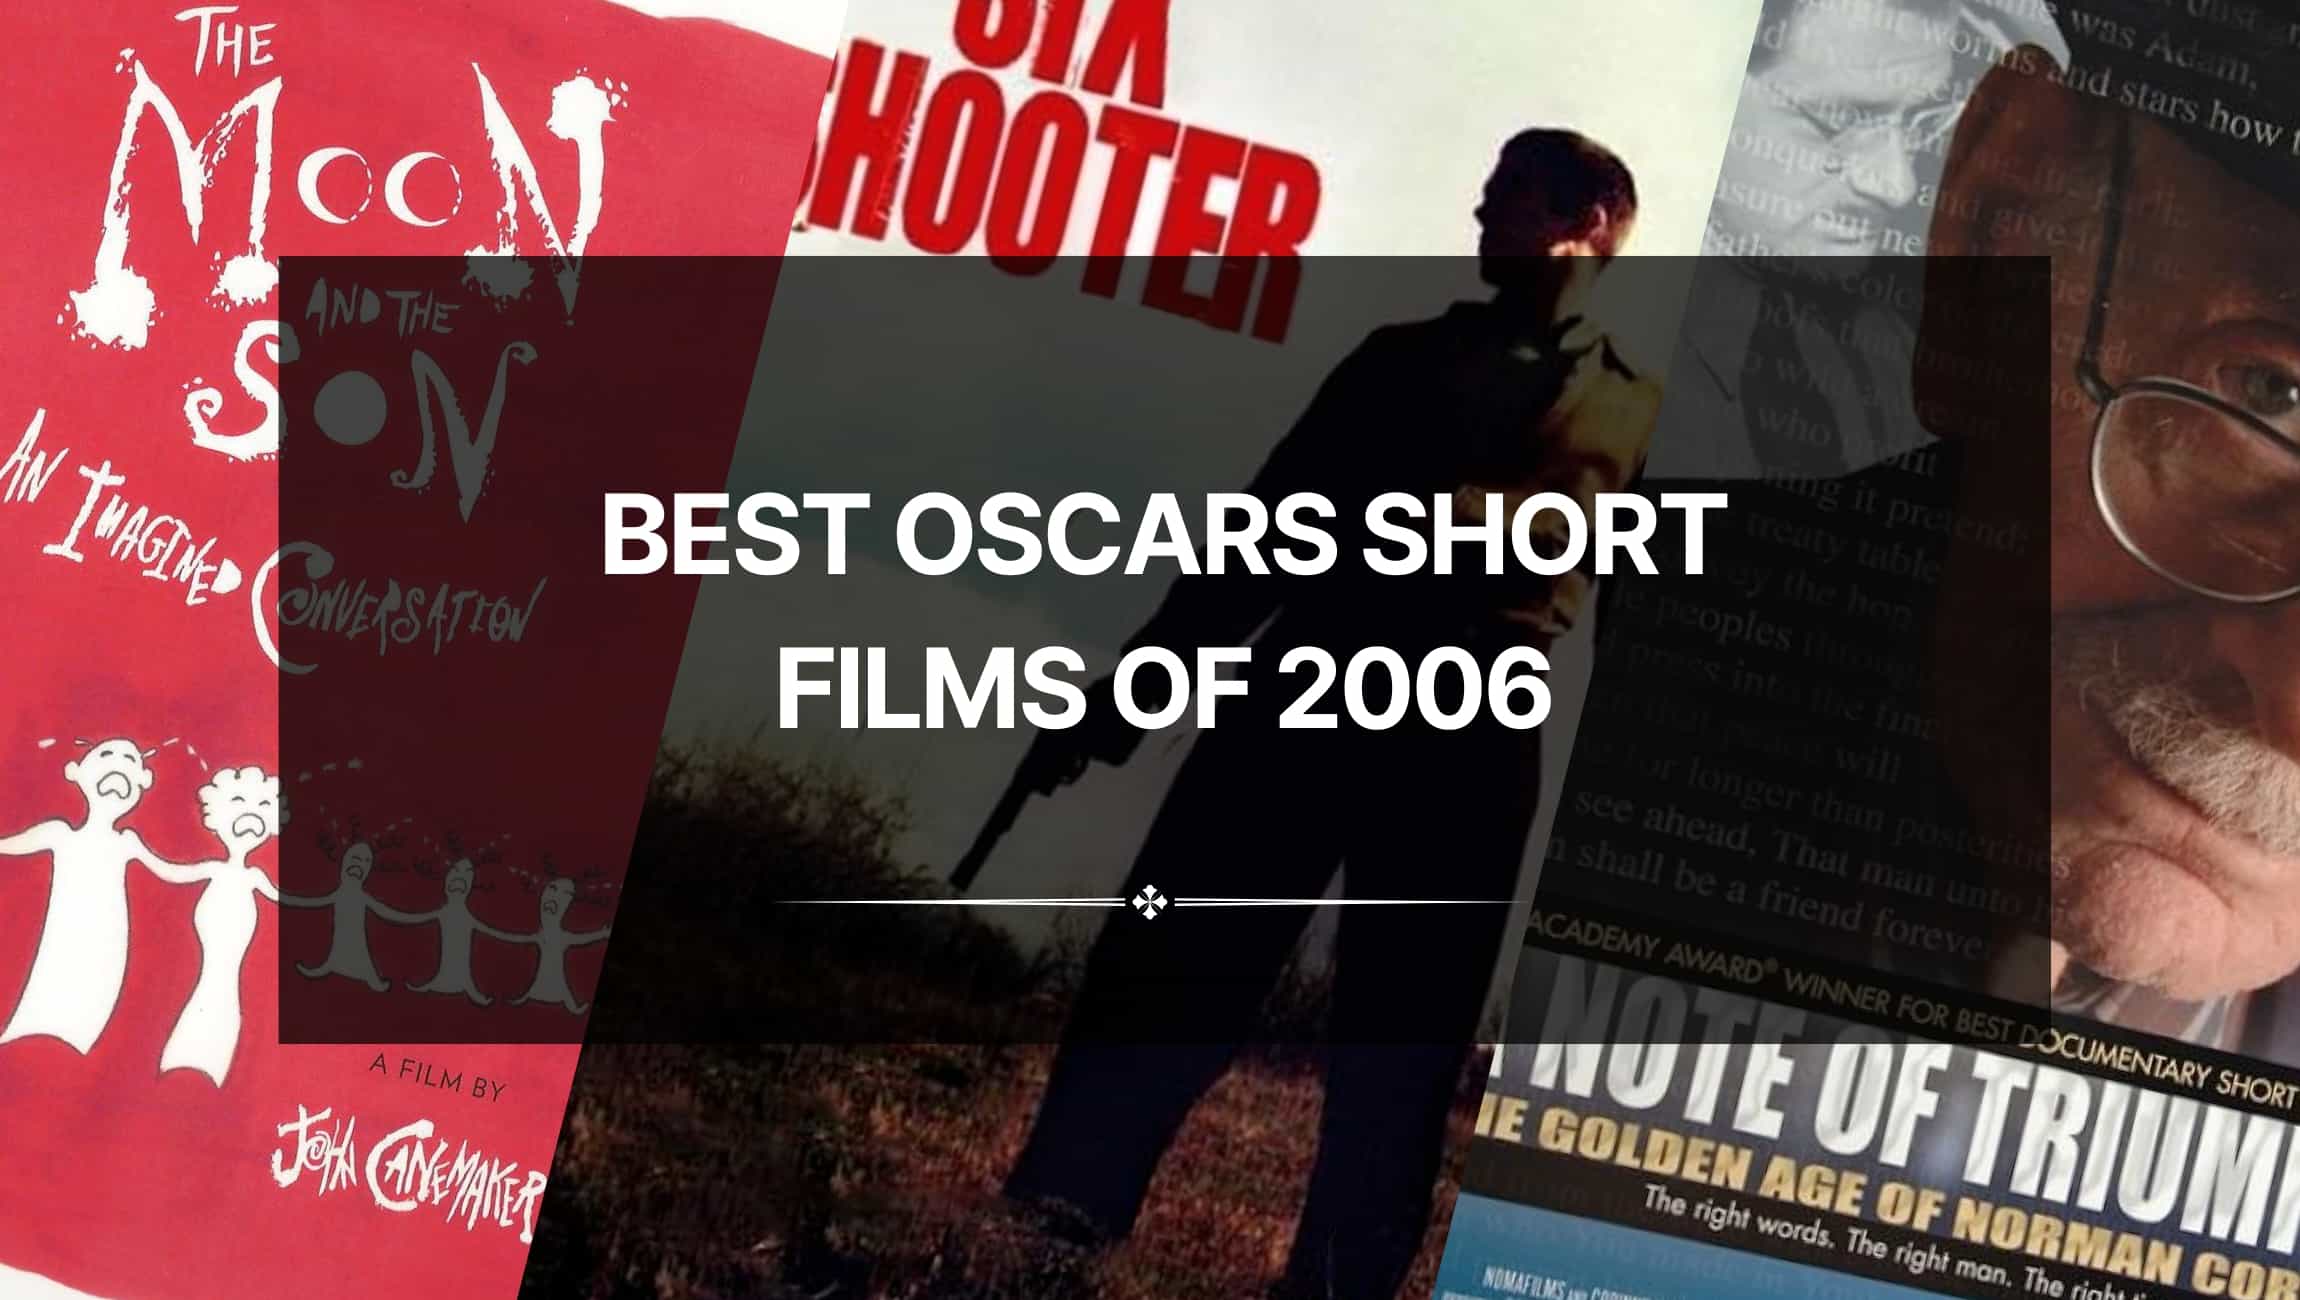 Best Oscars Short Films of 2006